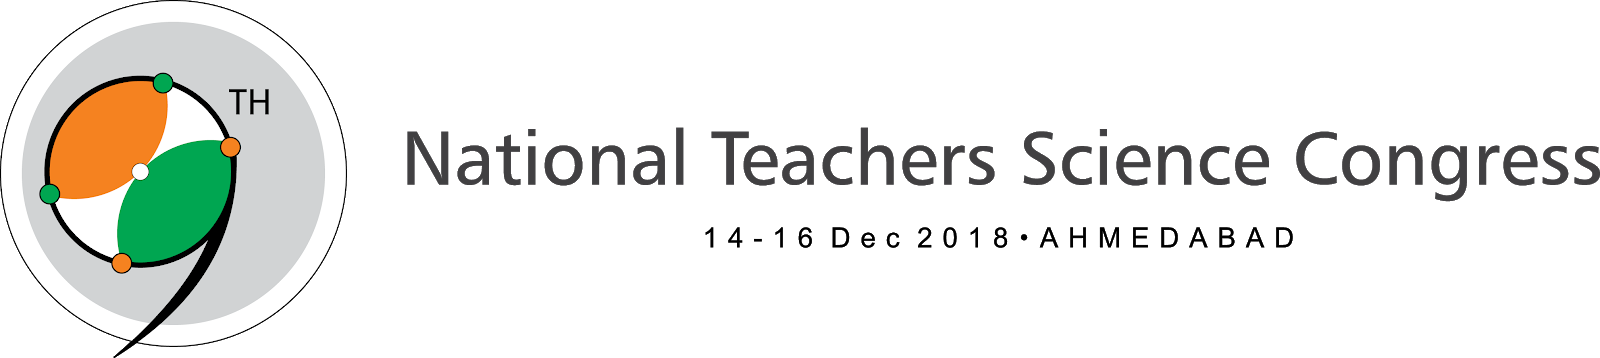 9th National Teachers Science Congress (NTSC)